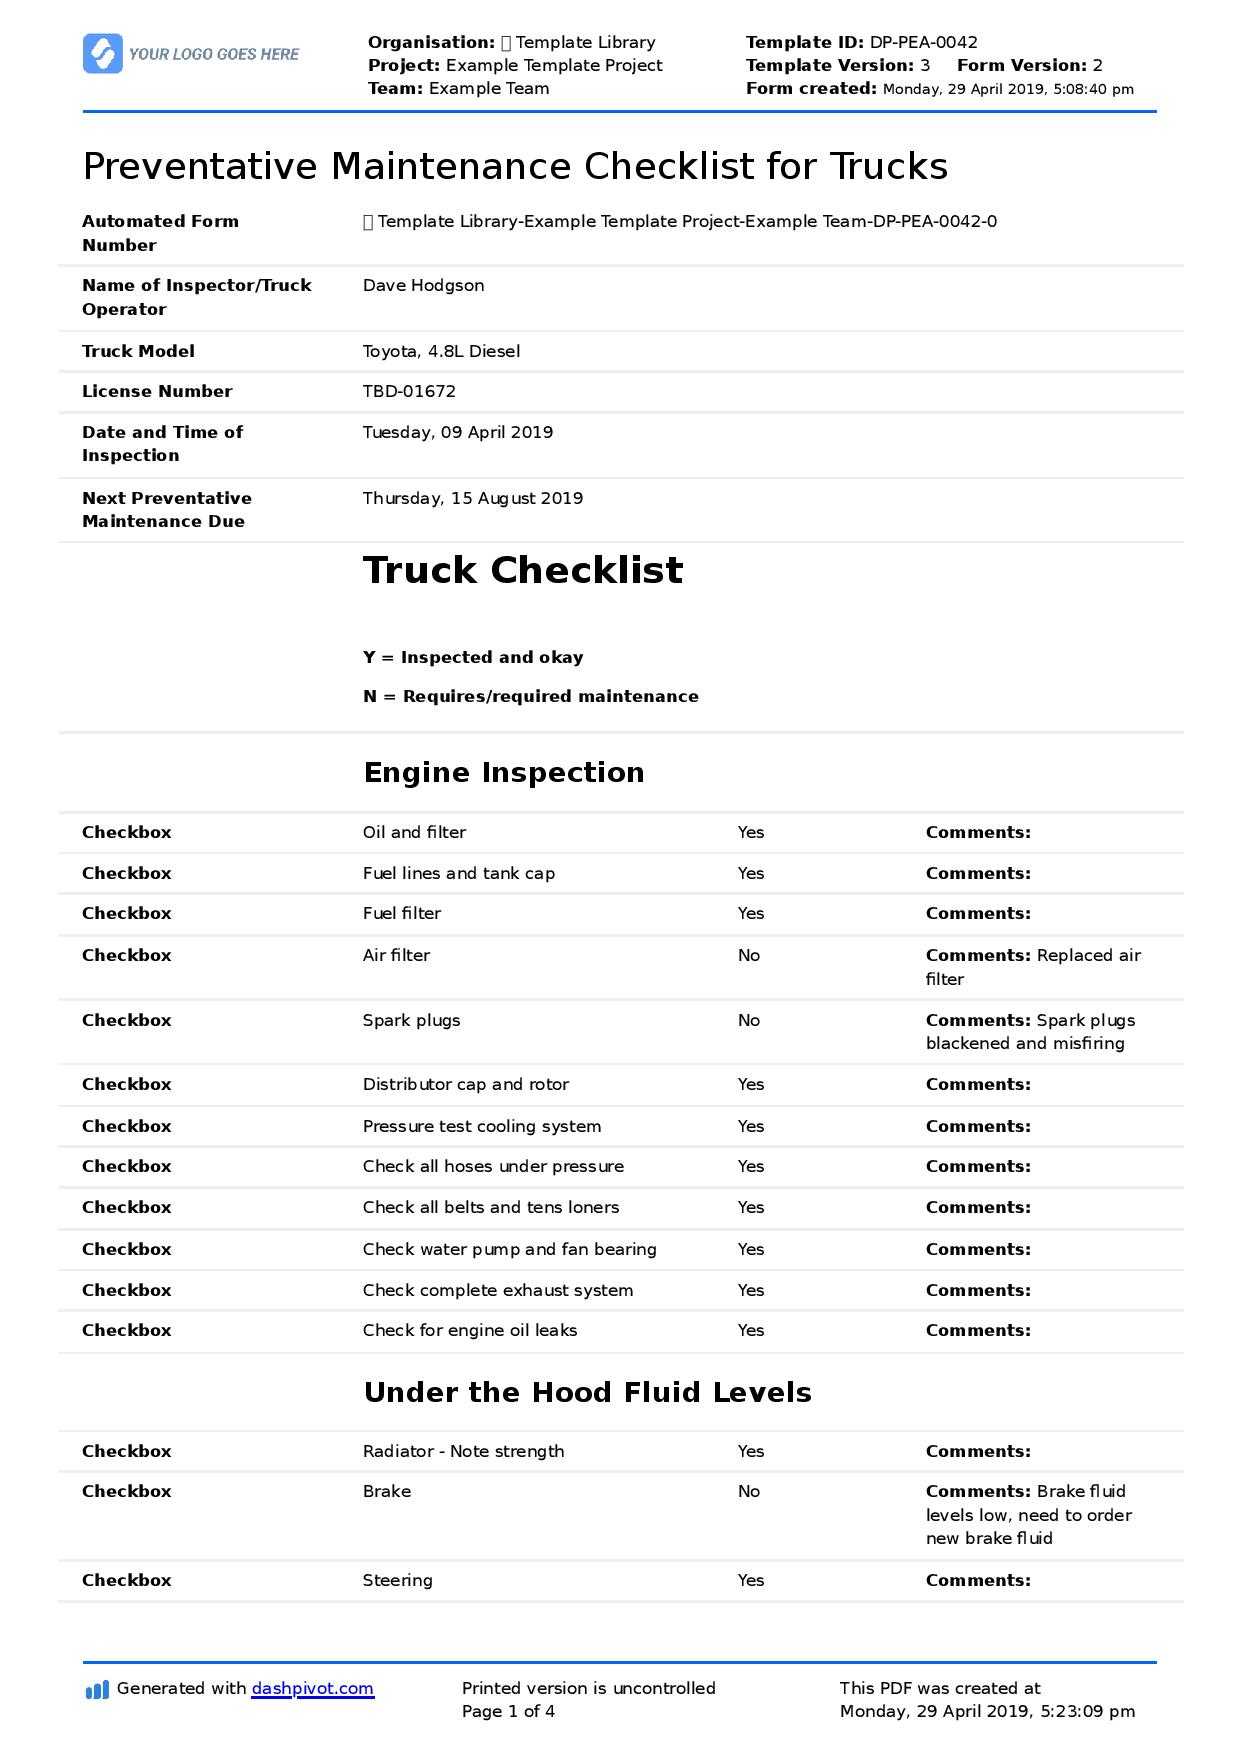 Preventative Maintenance Checklist For Trucks (Diesel Trucks With Regard To Computer Maintenance Report Template